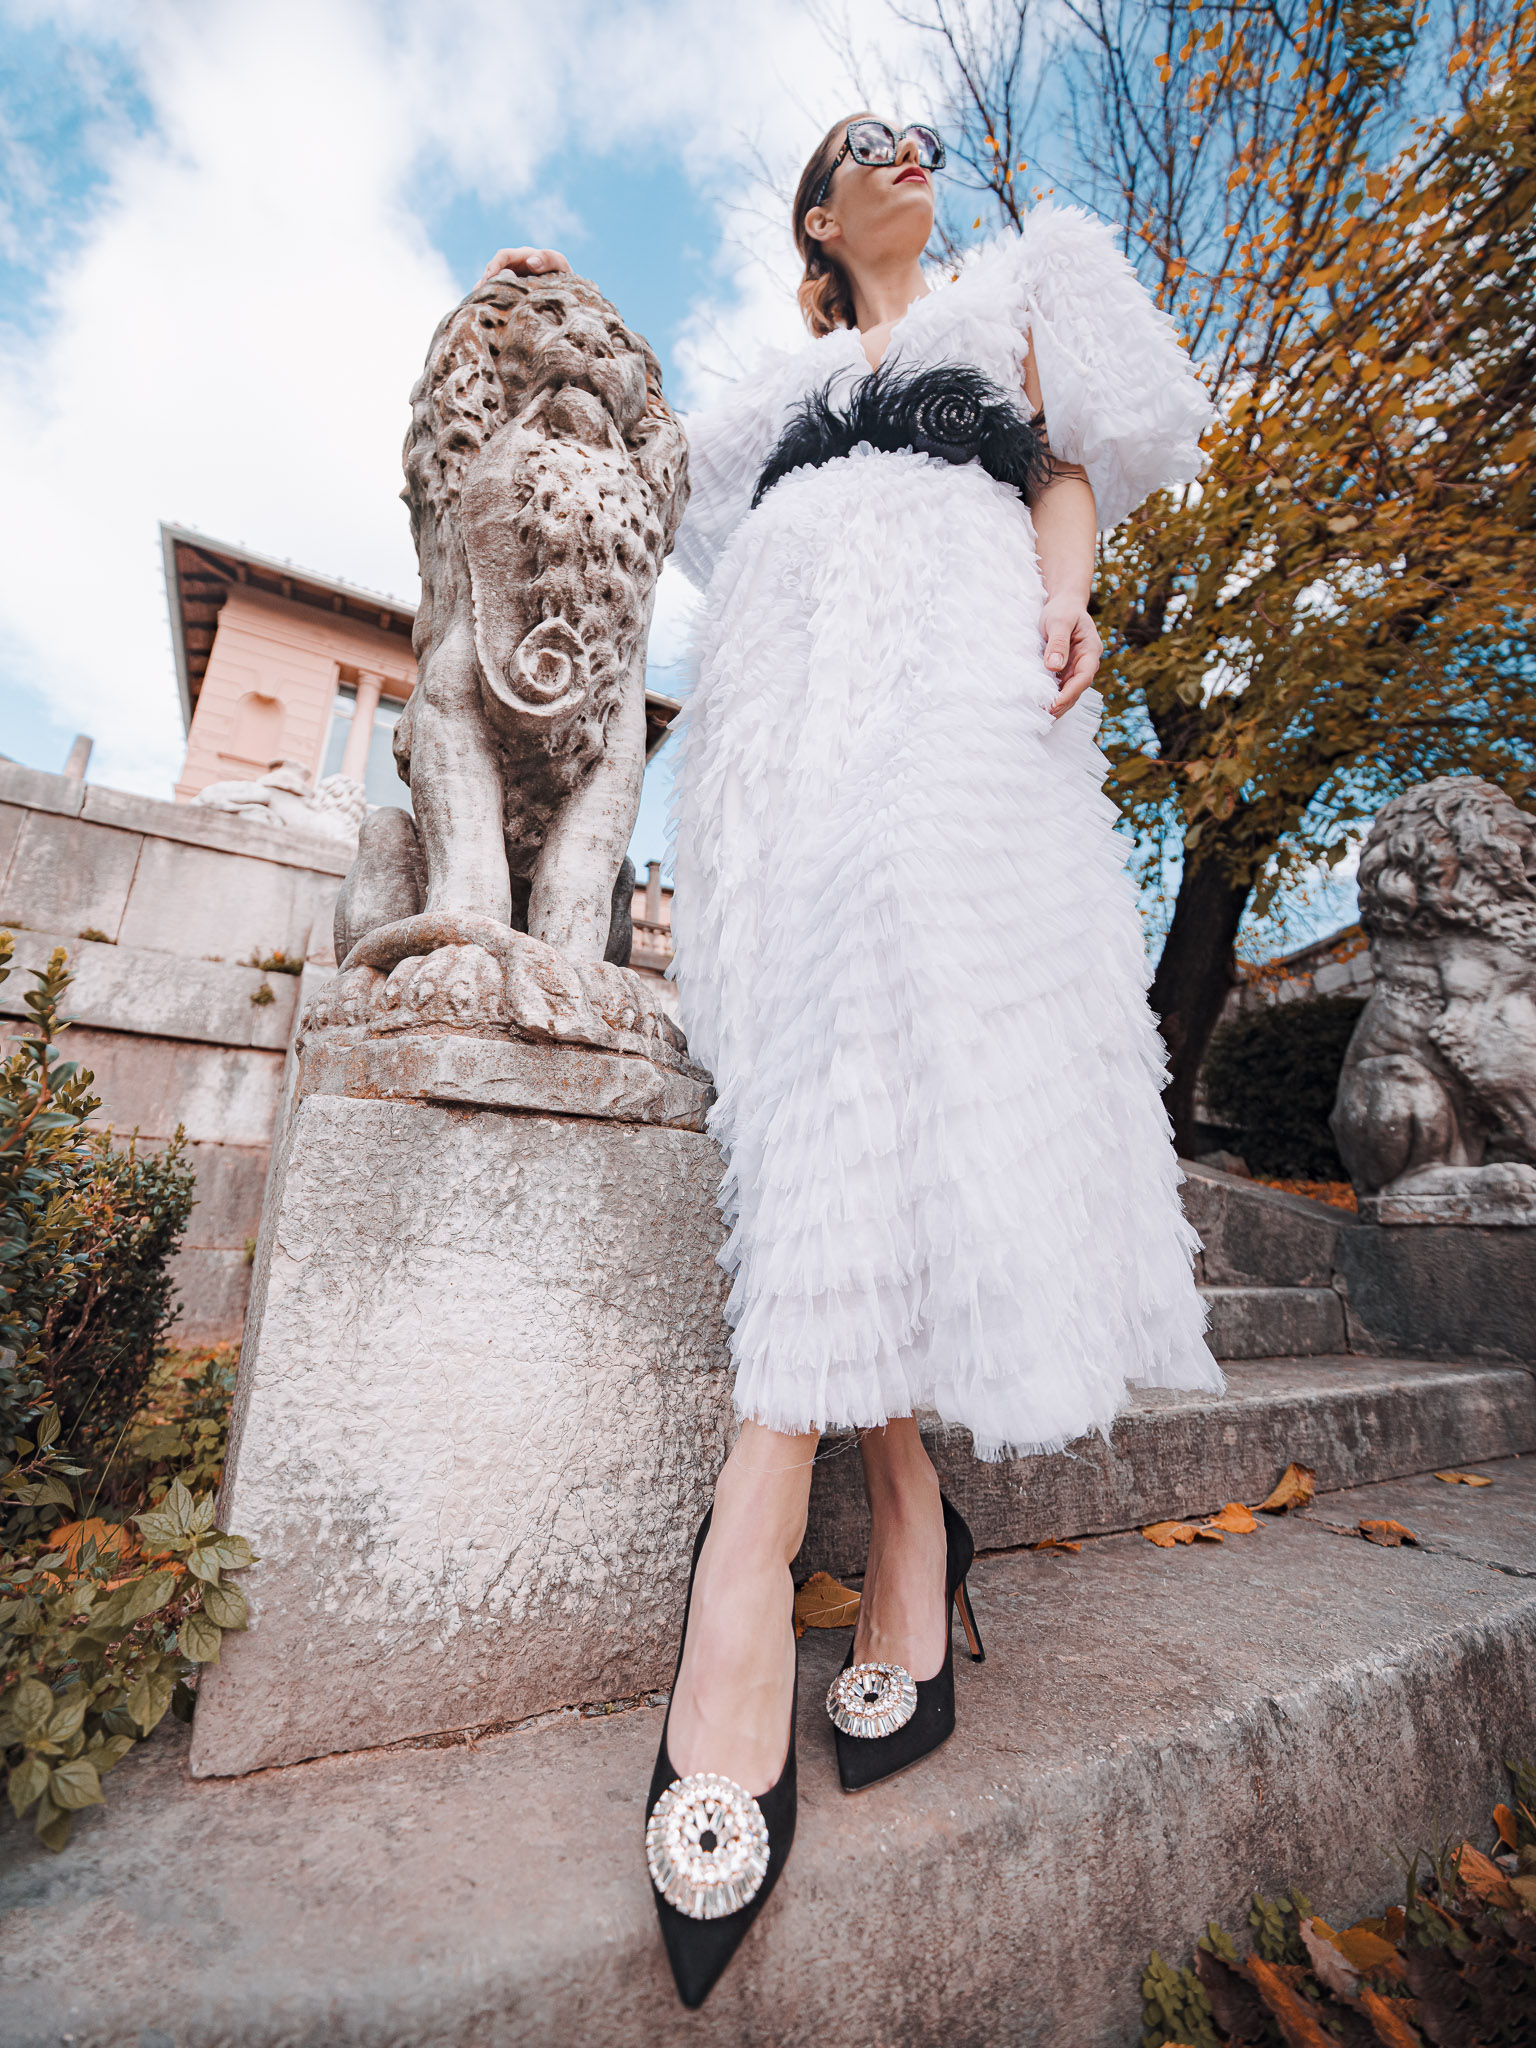 Extravagant Gala - najbolja domaća moda u foto/video kampanji